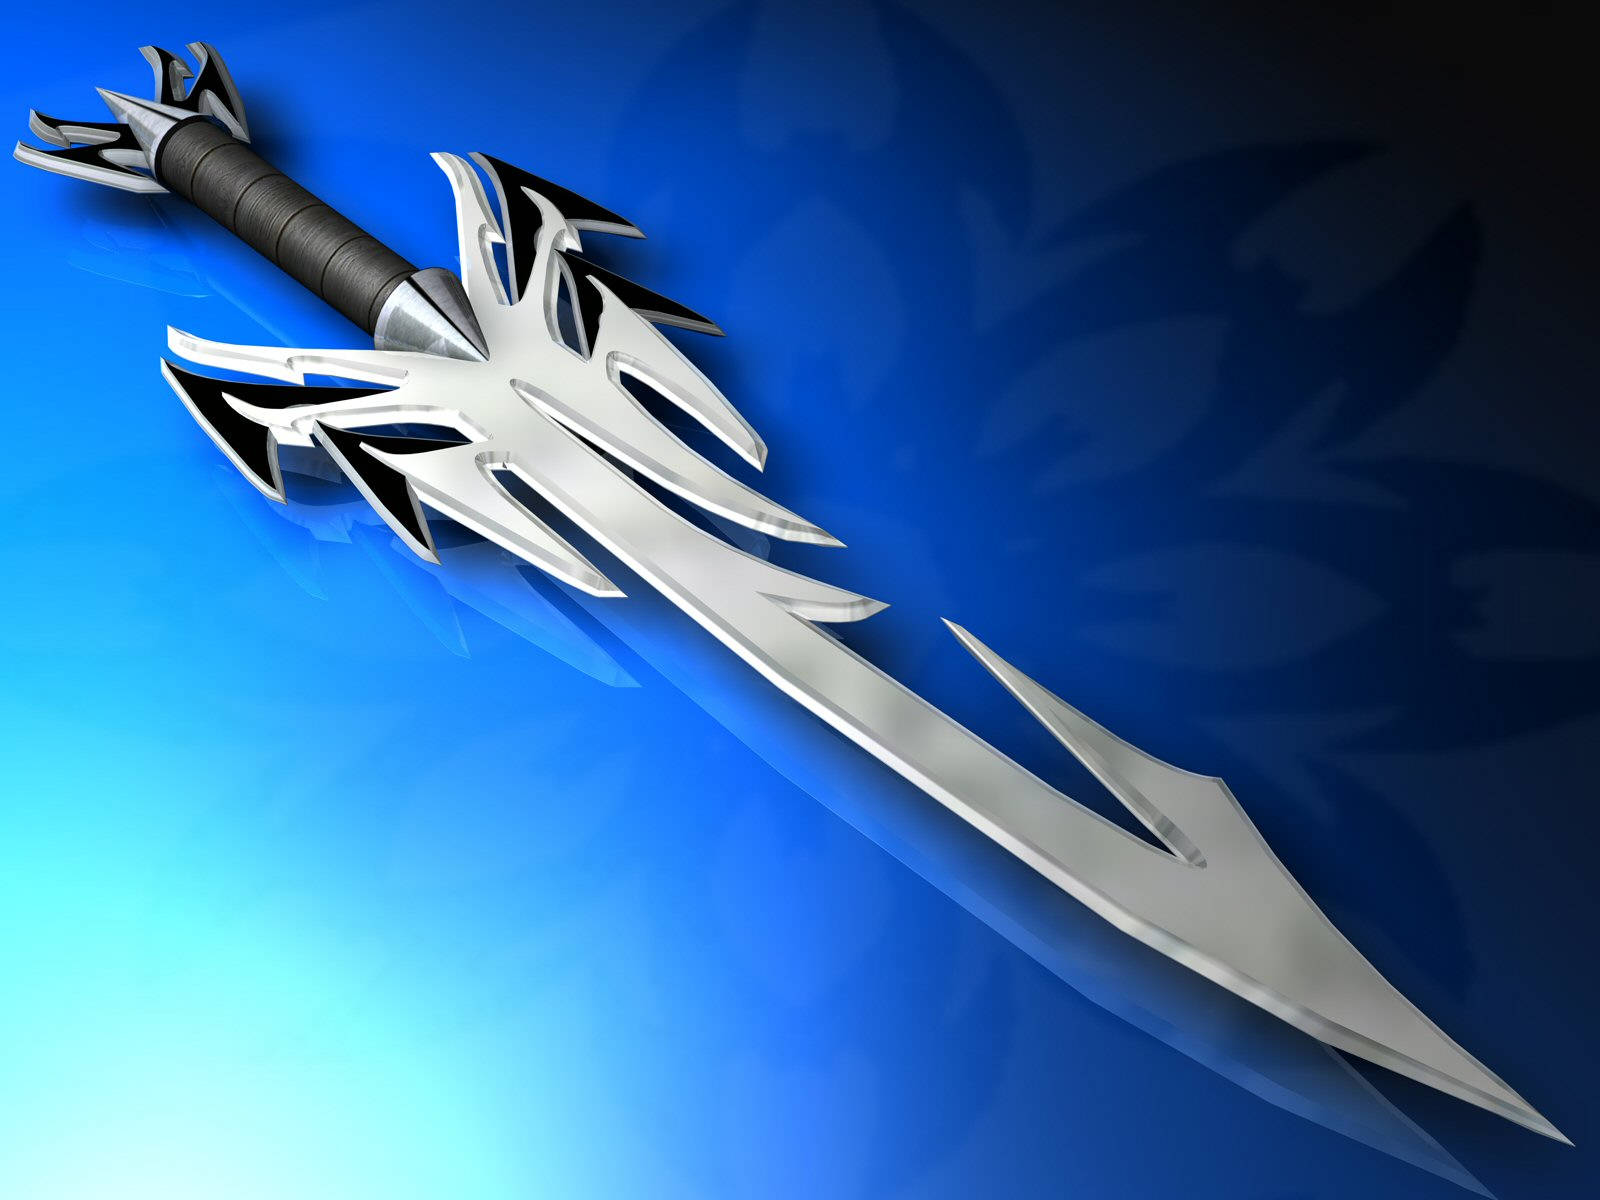 Sword In Blue Gradient Backdrop Background